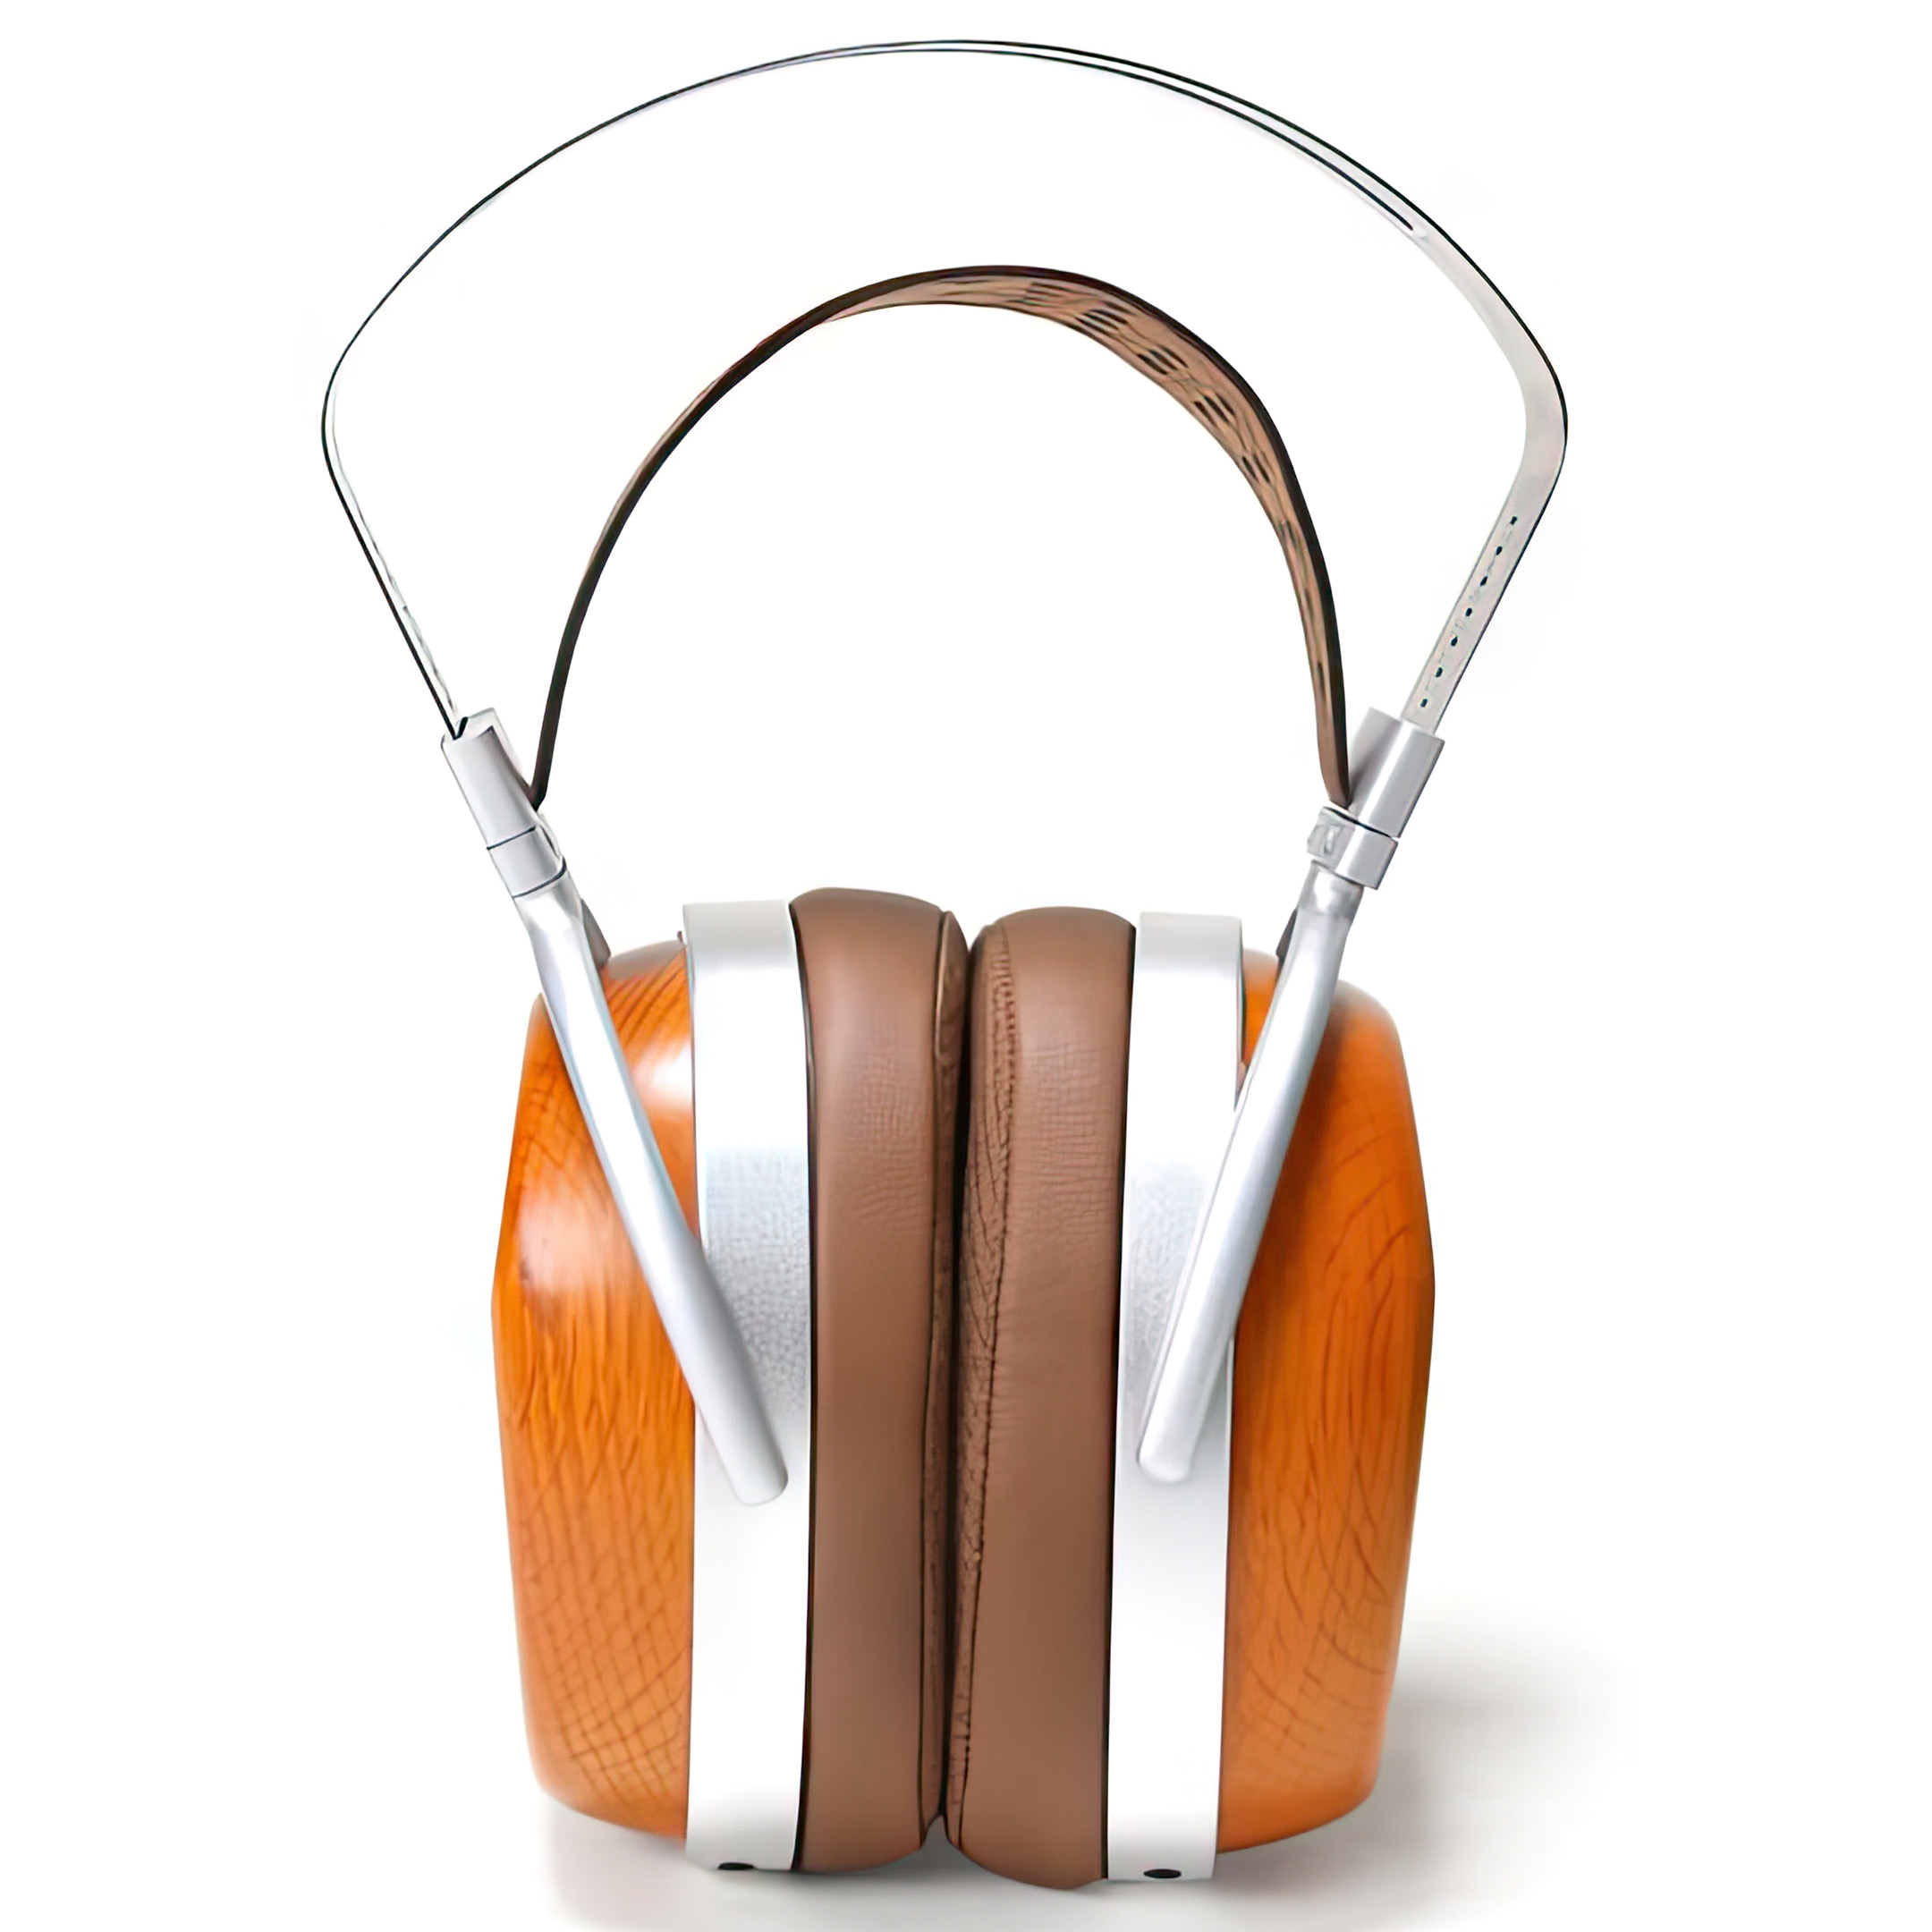 hifiman-audivina-closed-back-headphones-2-scaled